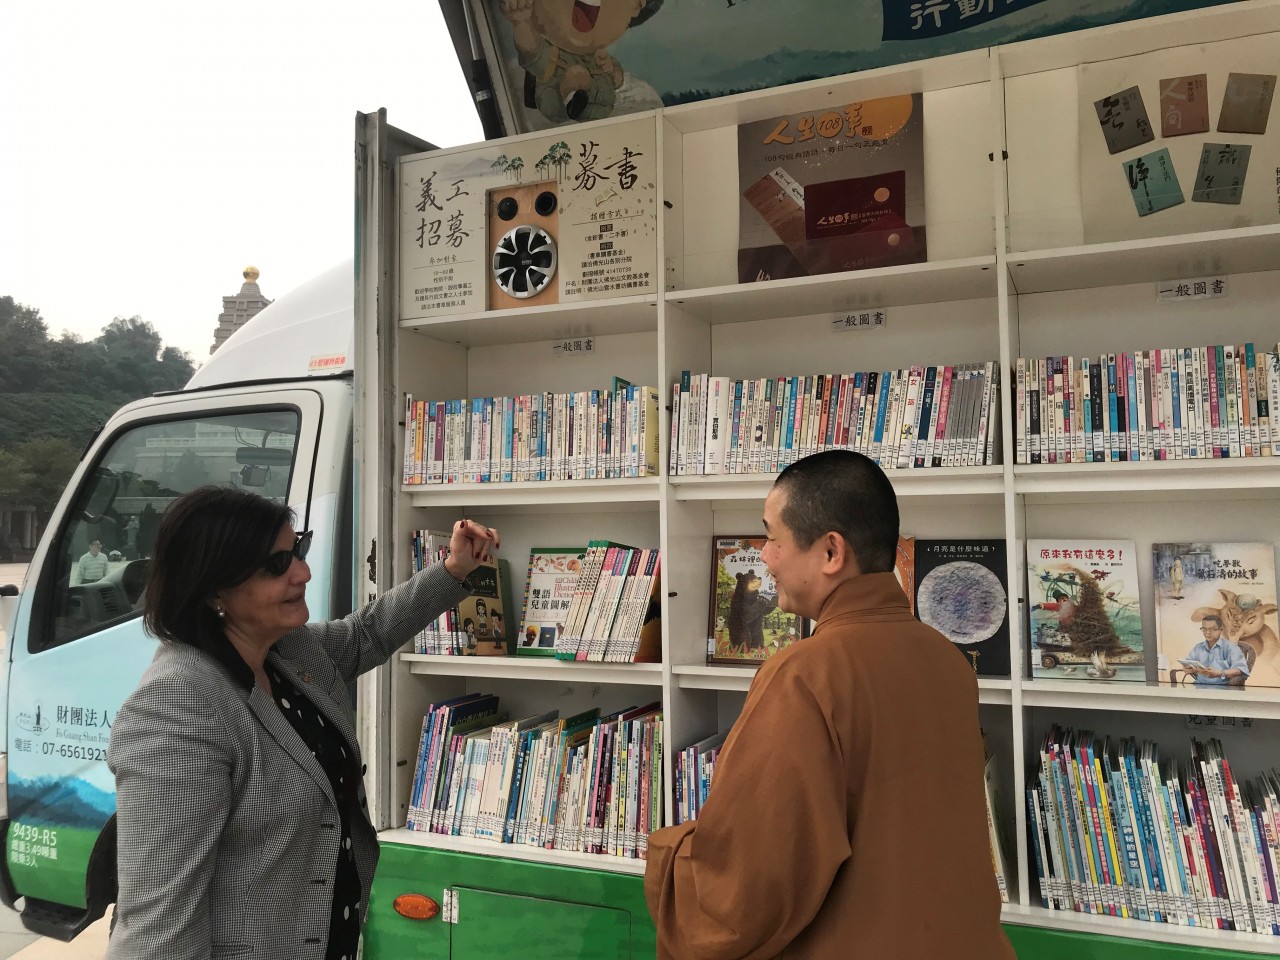 Glòria Pérez-Salmerón visits a bookmobile in Taiwan, China, run by a monk